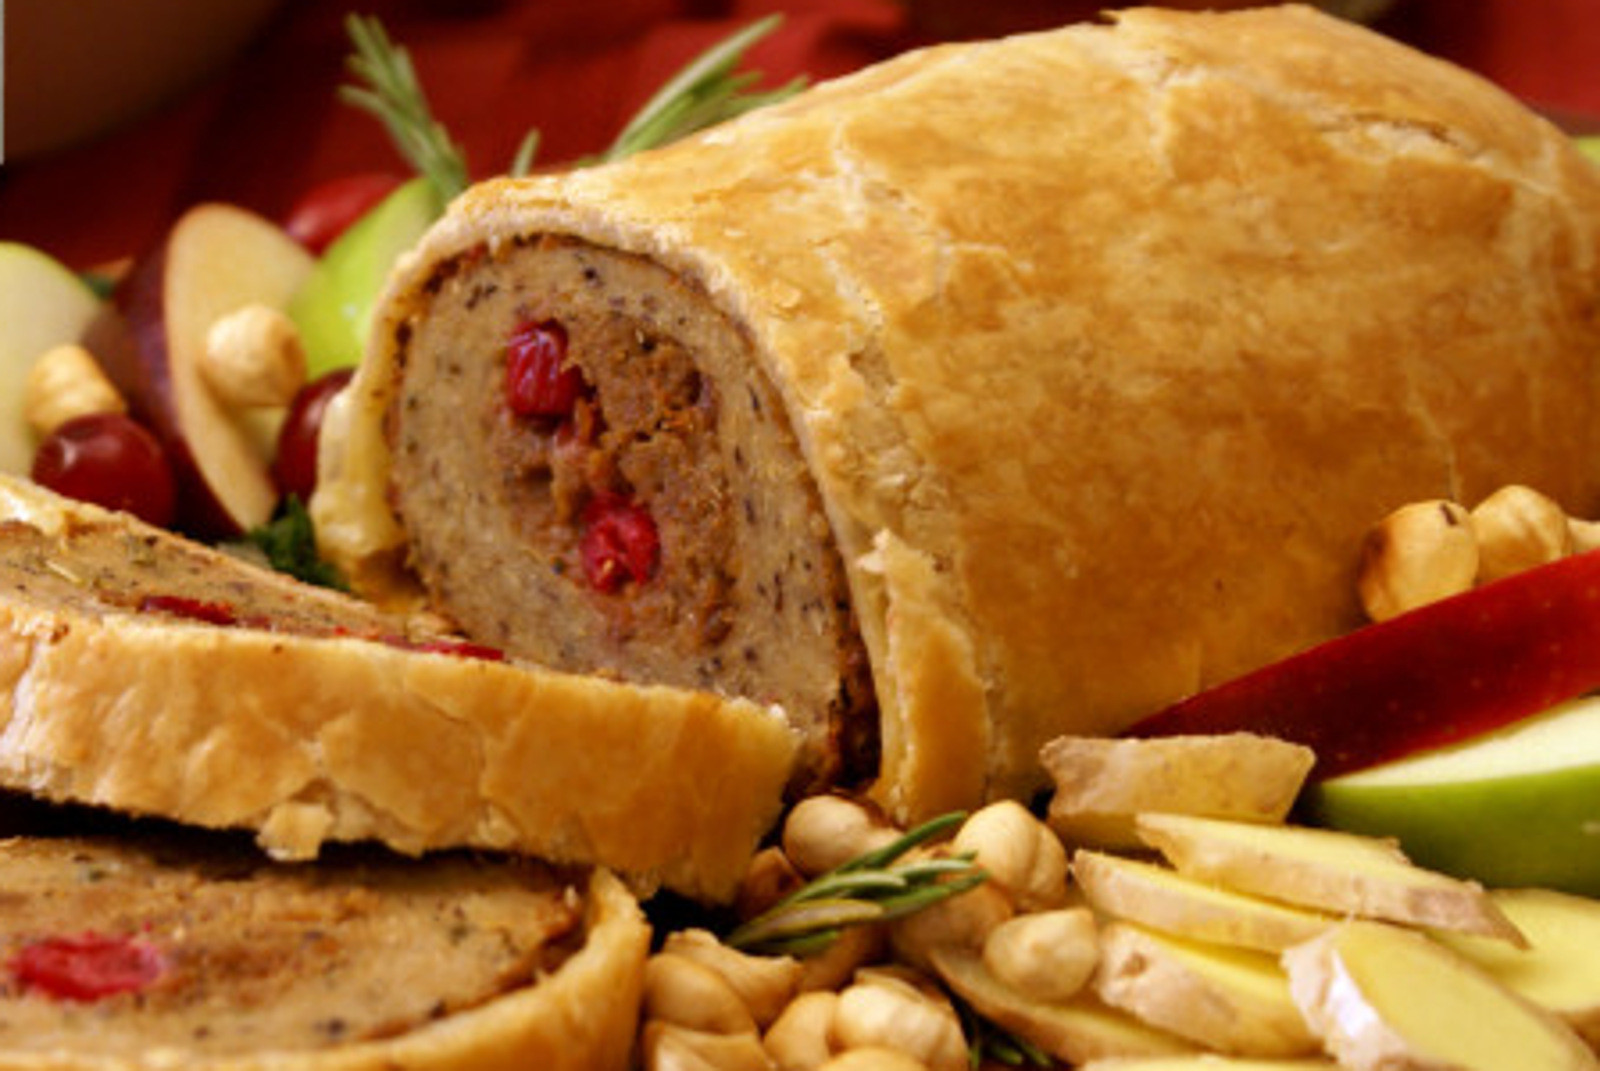 Turkey Alternative For Thanksgiving
 The Best Meatless Turkey Alternatives for Thanksgiving